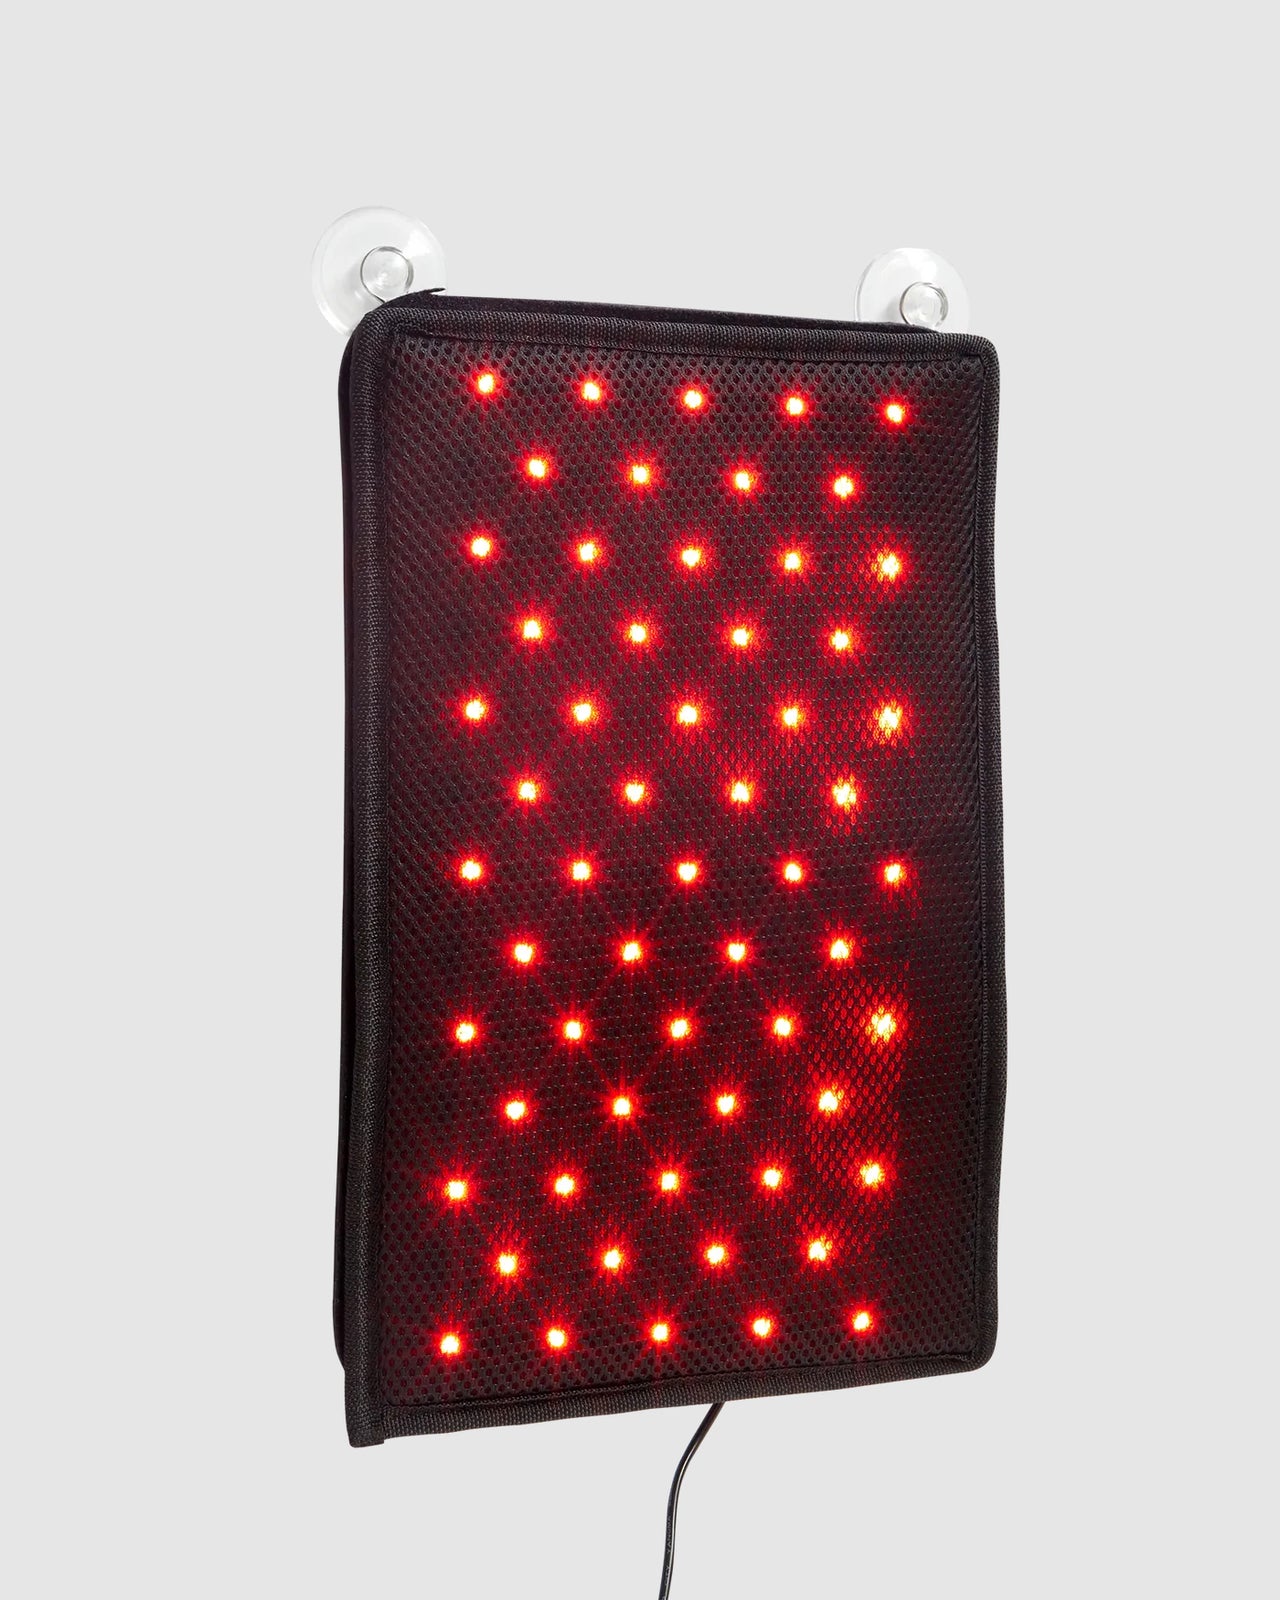 Thera Tri-Lite Red Light Panel